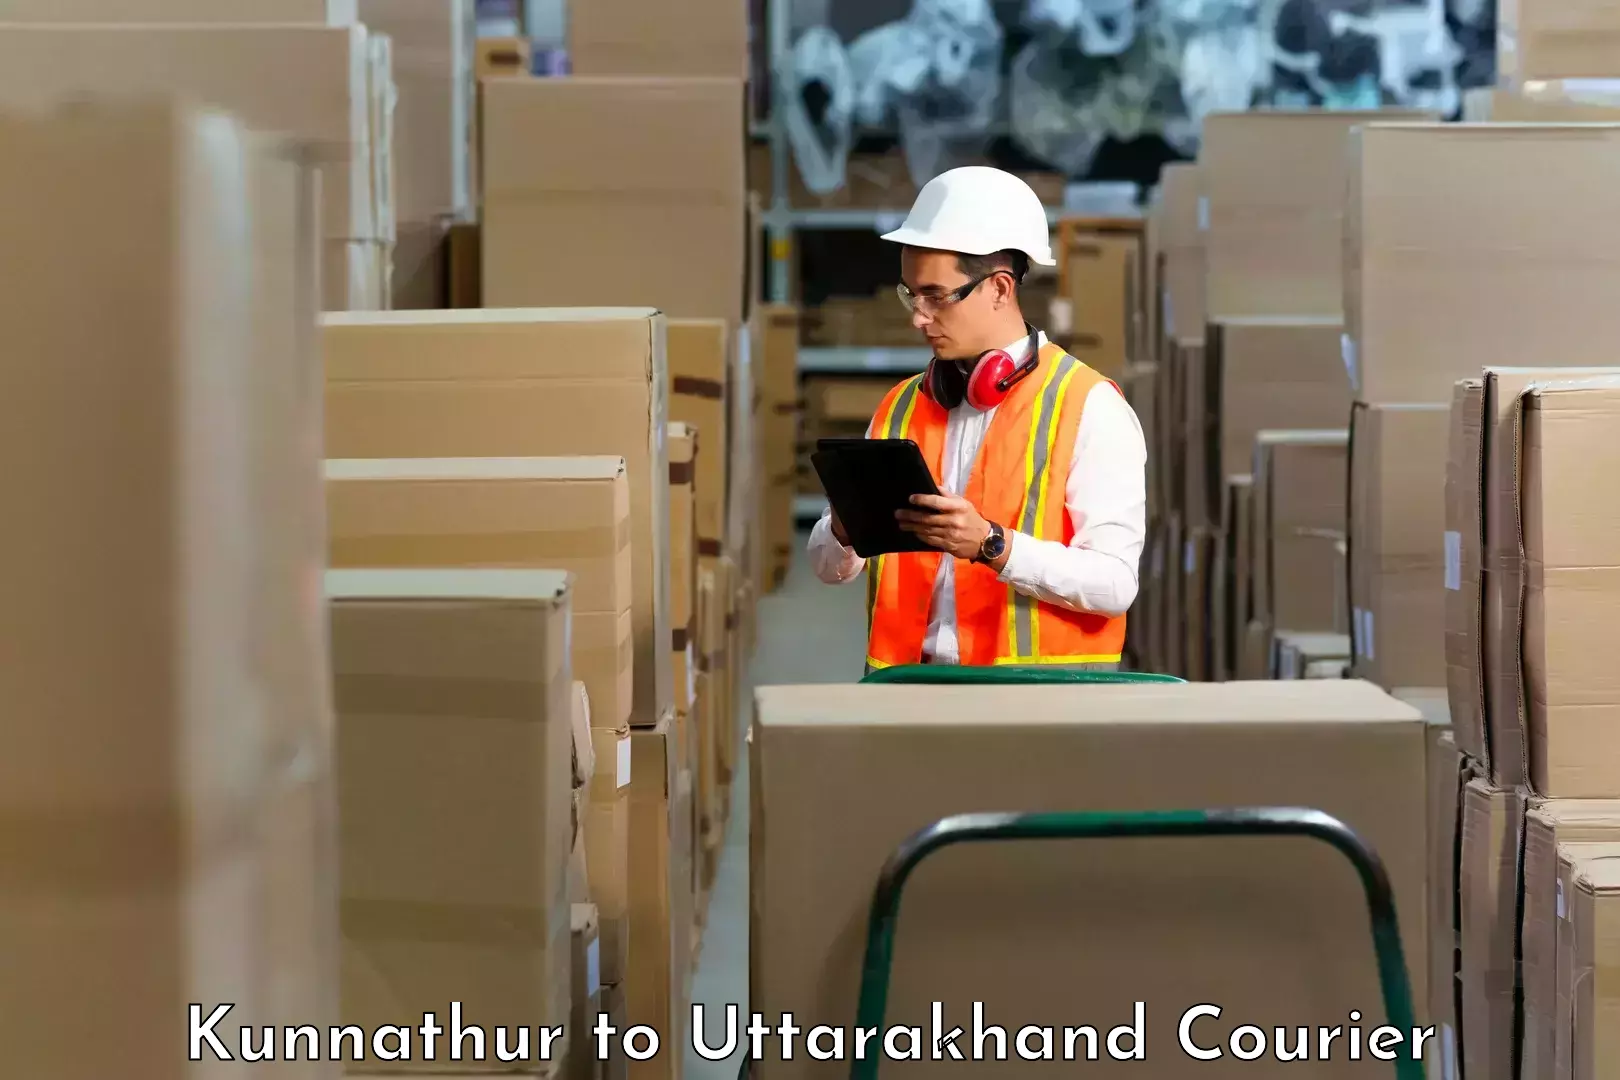 Professional courier handling Kunnathur to Rishikesh